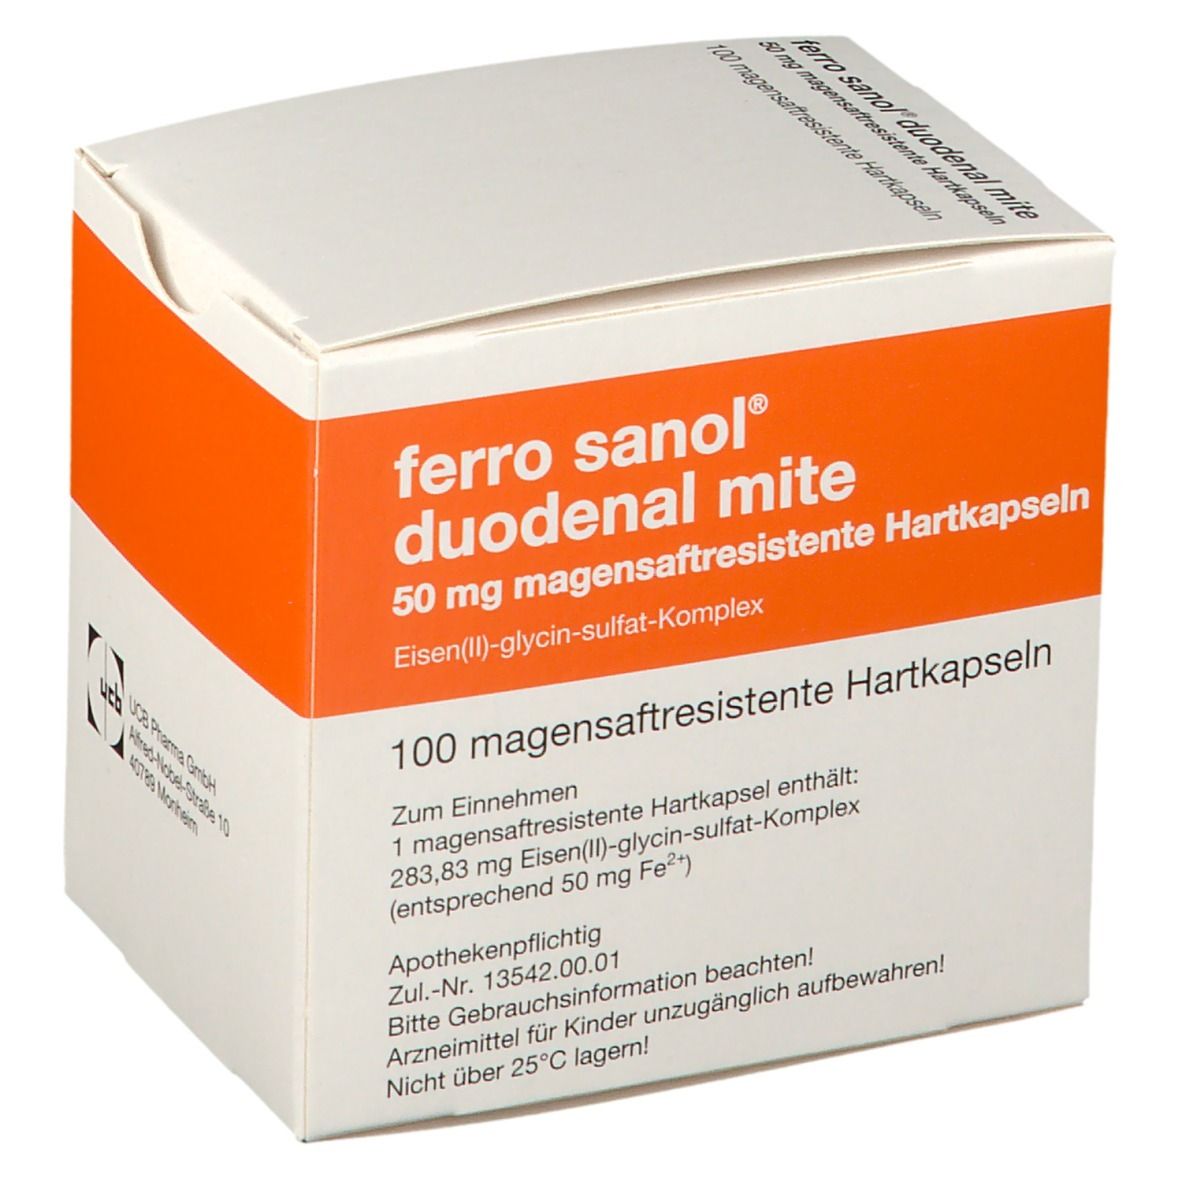 ferro sanol® duodenal mite 50 mg Kapseln